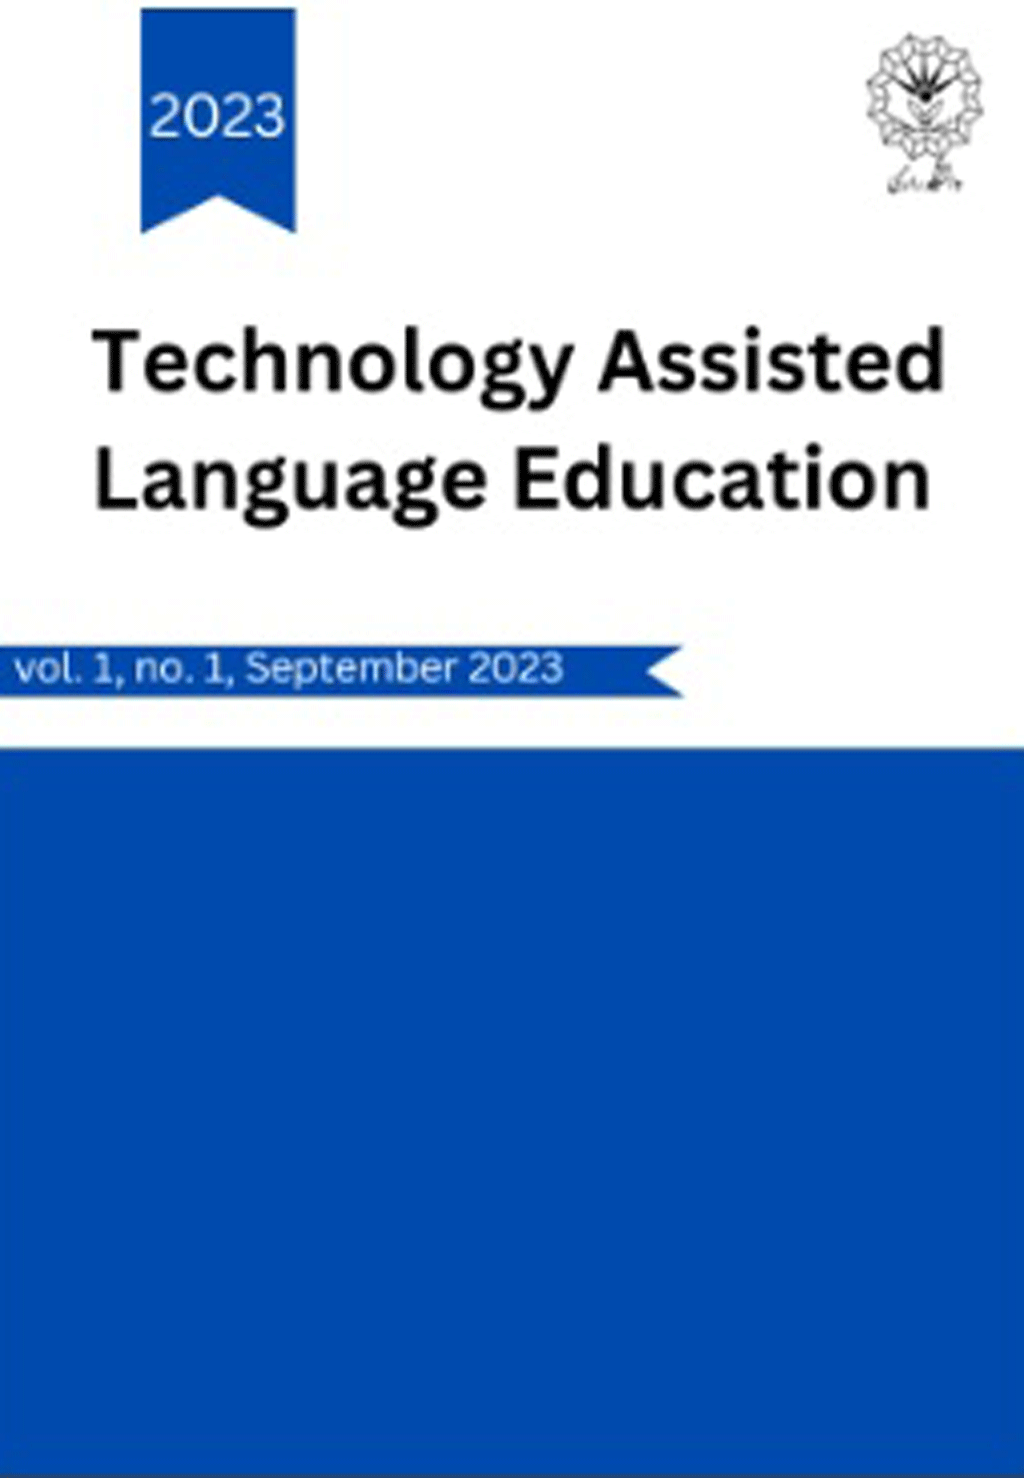 Technology Assisted Language Education - September 2023, Volume 1 - Numbr 1